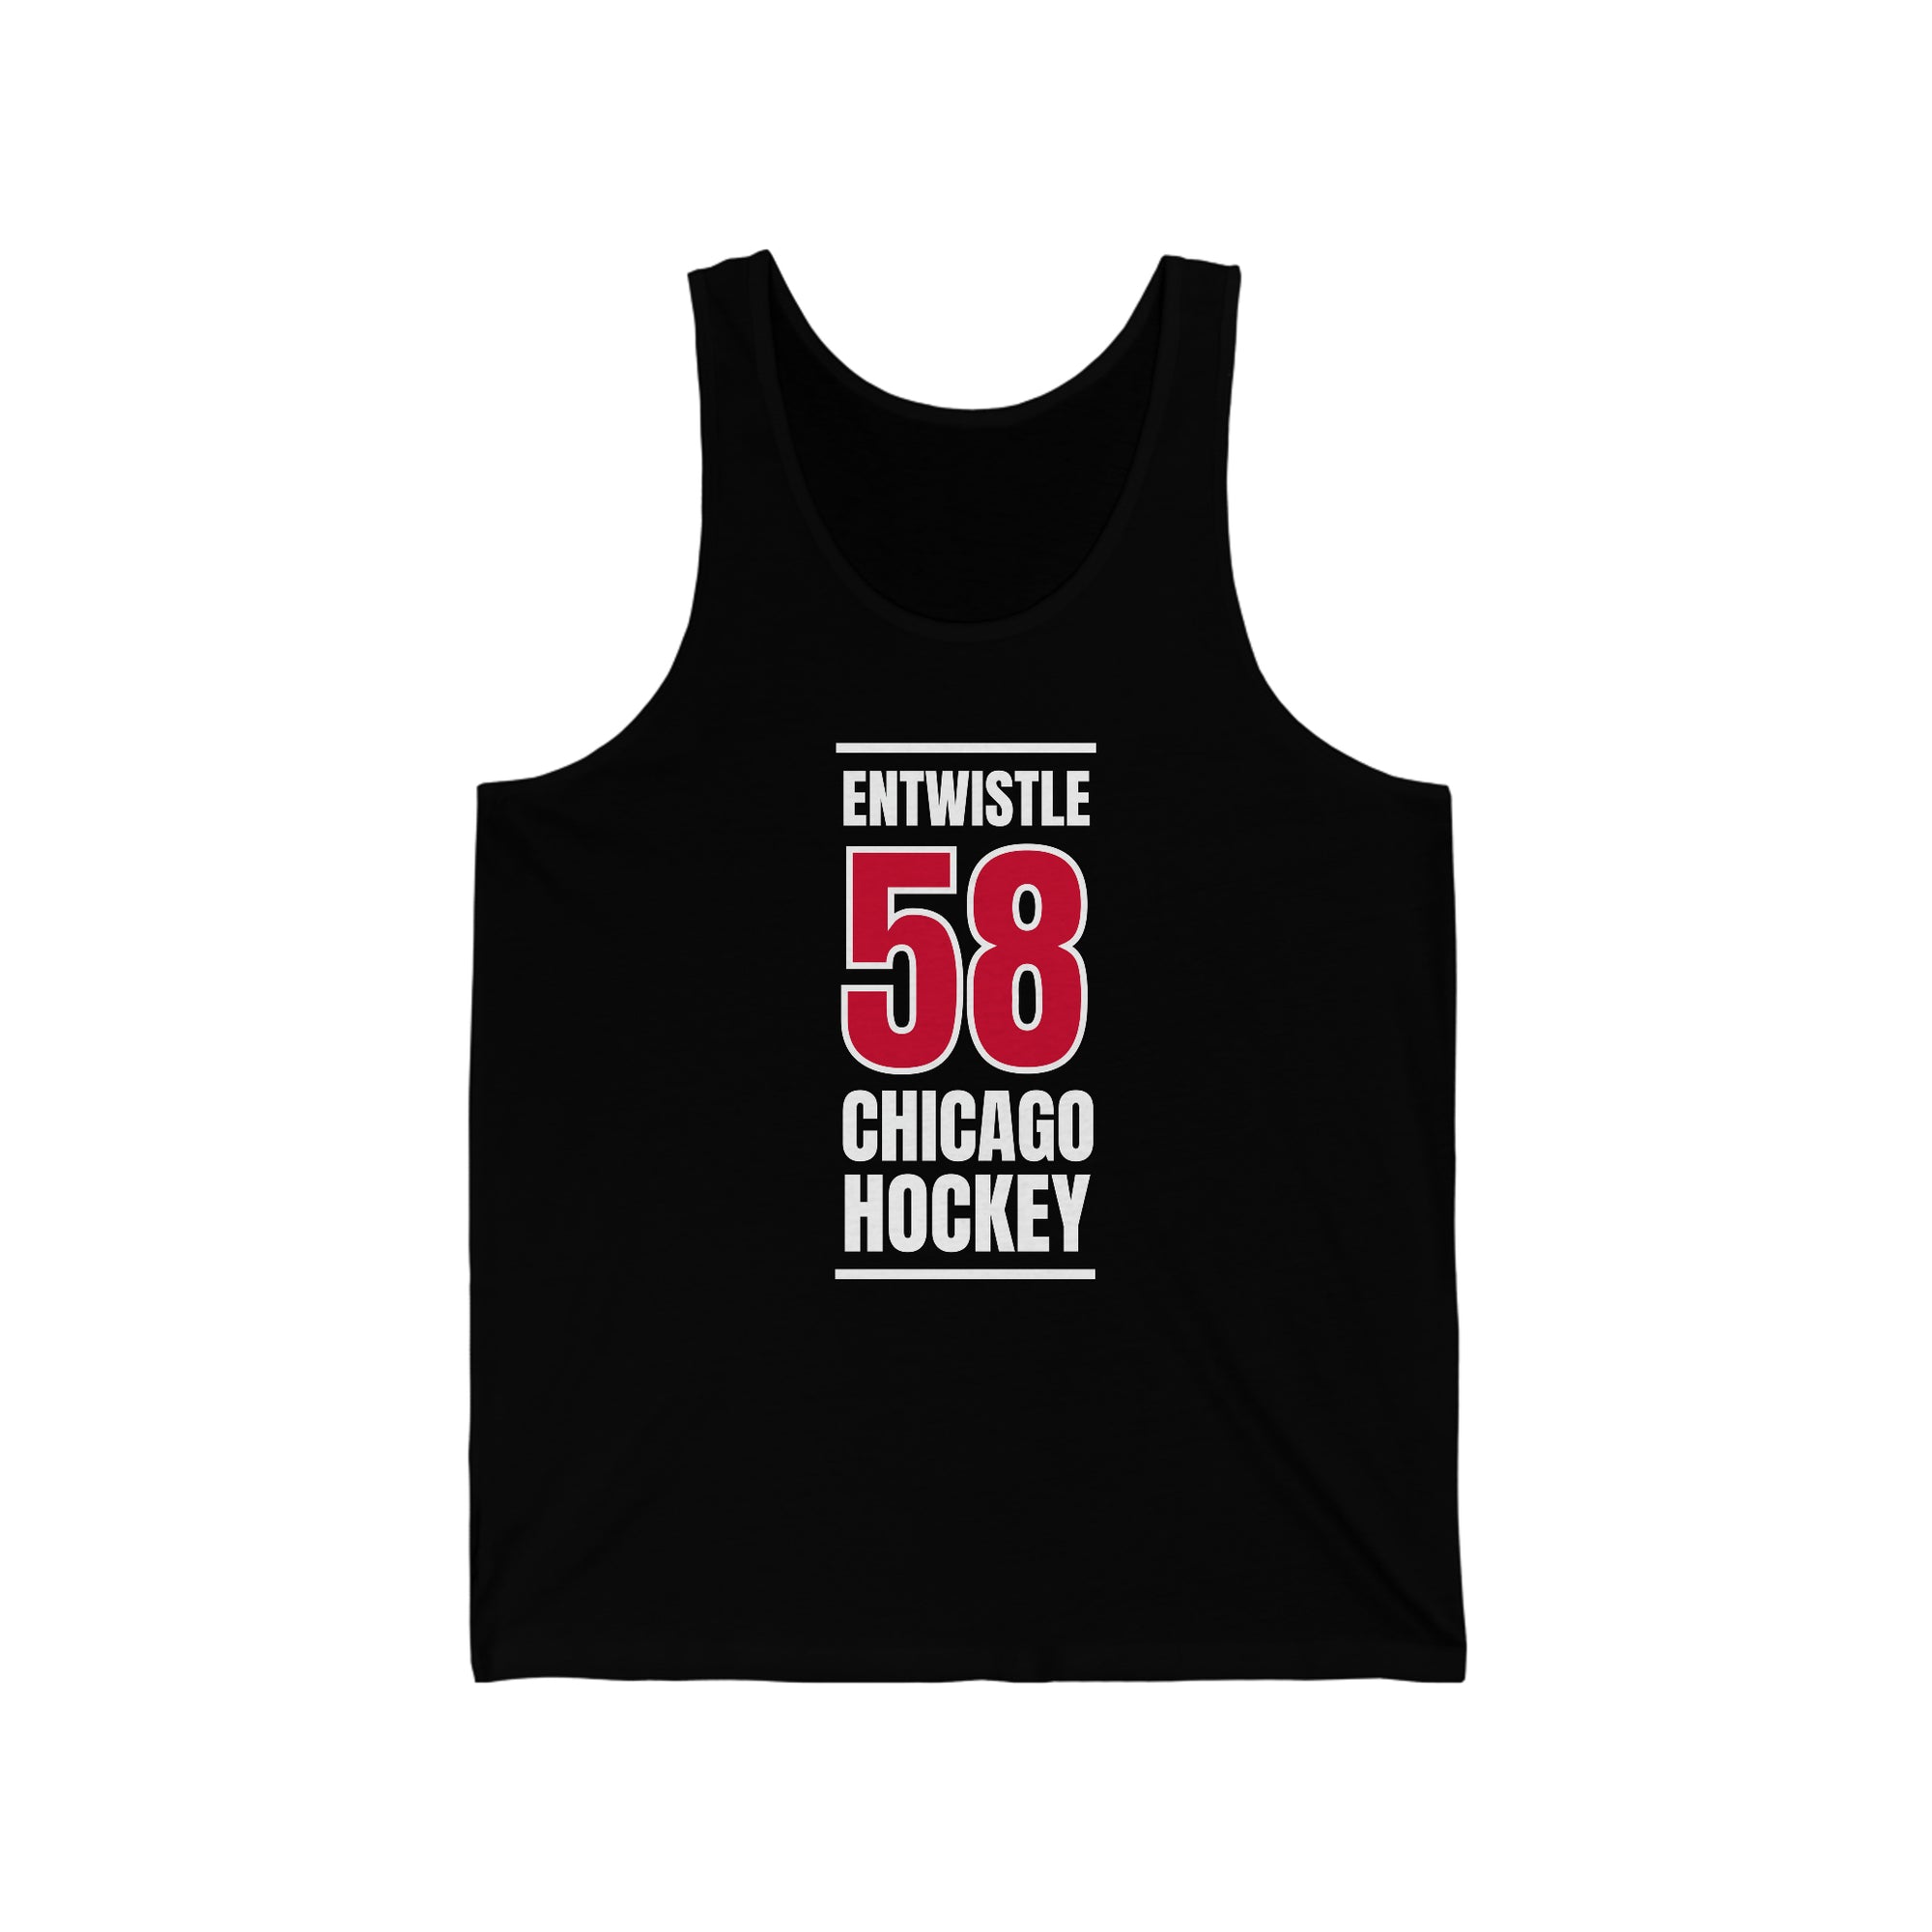 Entwistle 58 Chicago Hockey Red Vertical Design Unisex Jersey Tank Top